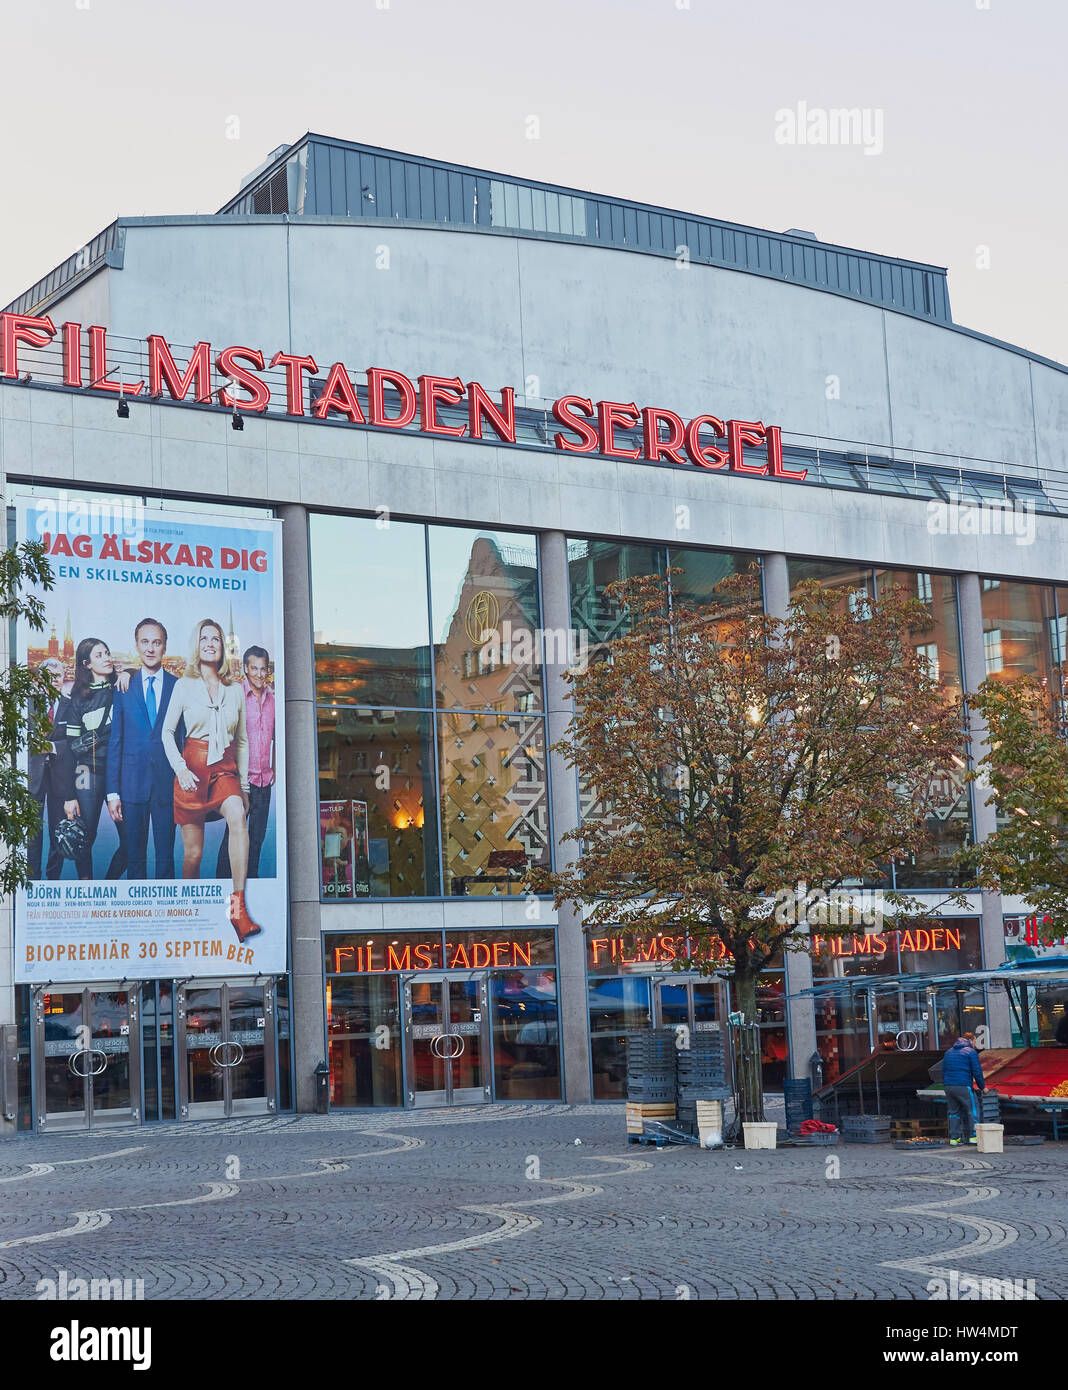 Multiscreen cinema, Hotorget, Stockholm, Sweden, Scandinavia Stock Photo